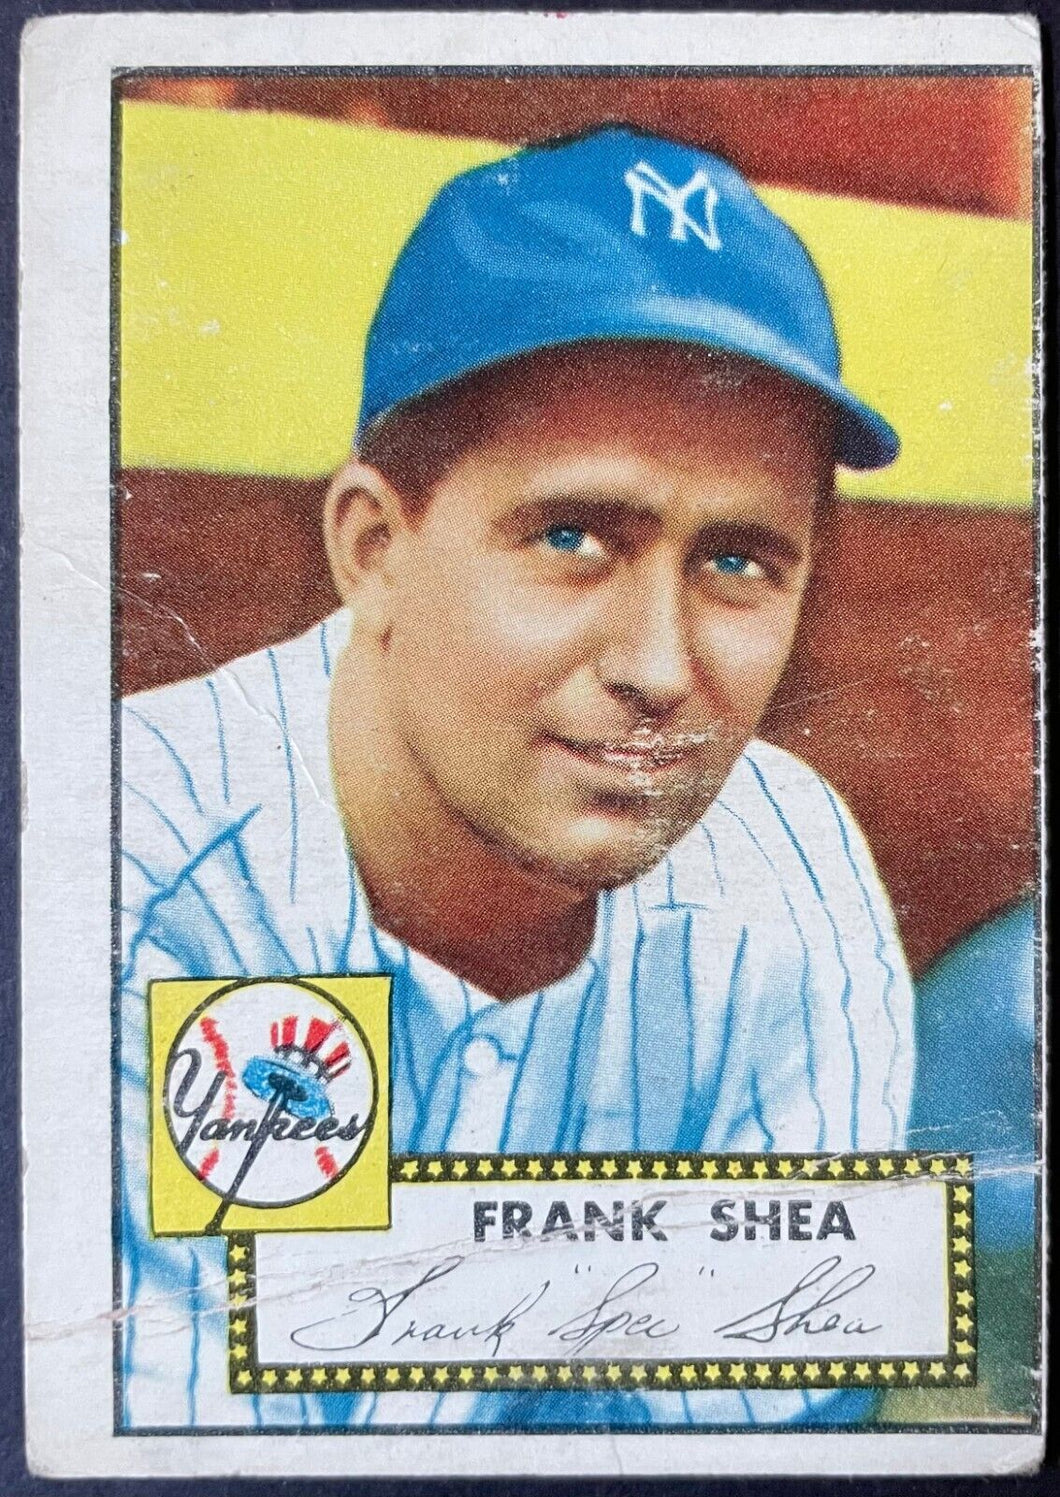 1952 Topps Baseball Frank Shea #248 New York Yankees MLB Card Vintage